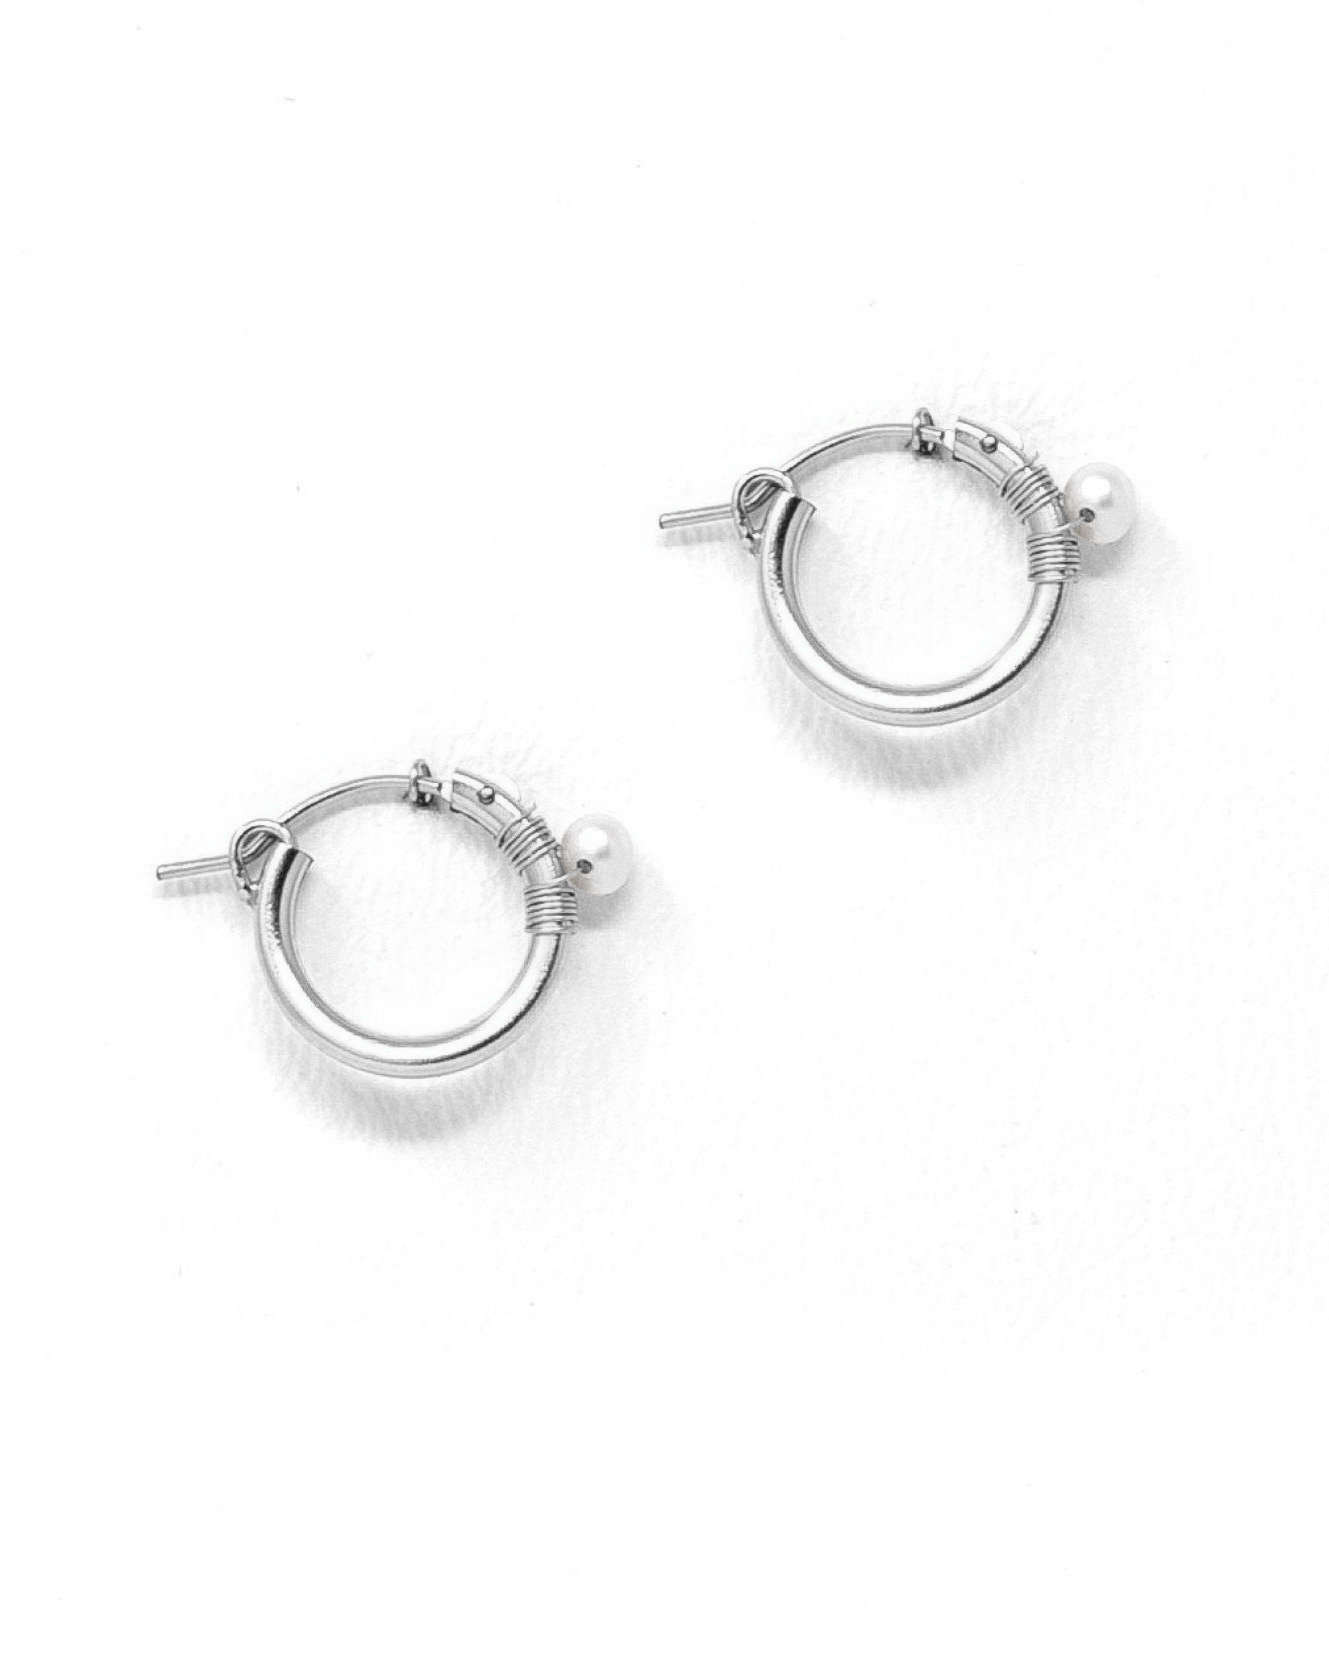 Natalie Earrings by KOZAKH. 12mm snap closure hoop earrings in Sterling Silver, featuring a 7mm white potato Pearl.